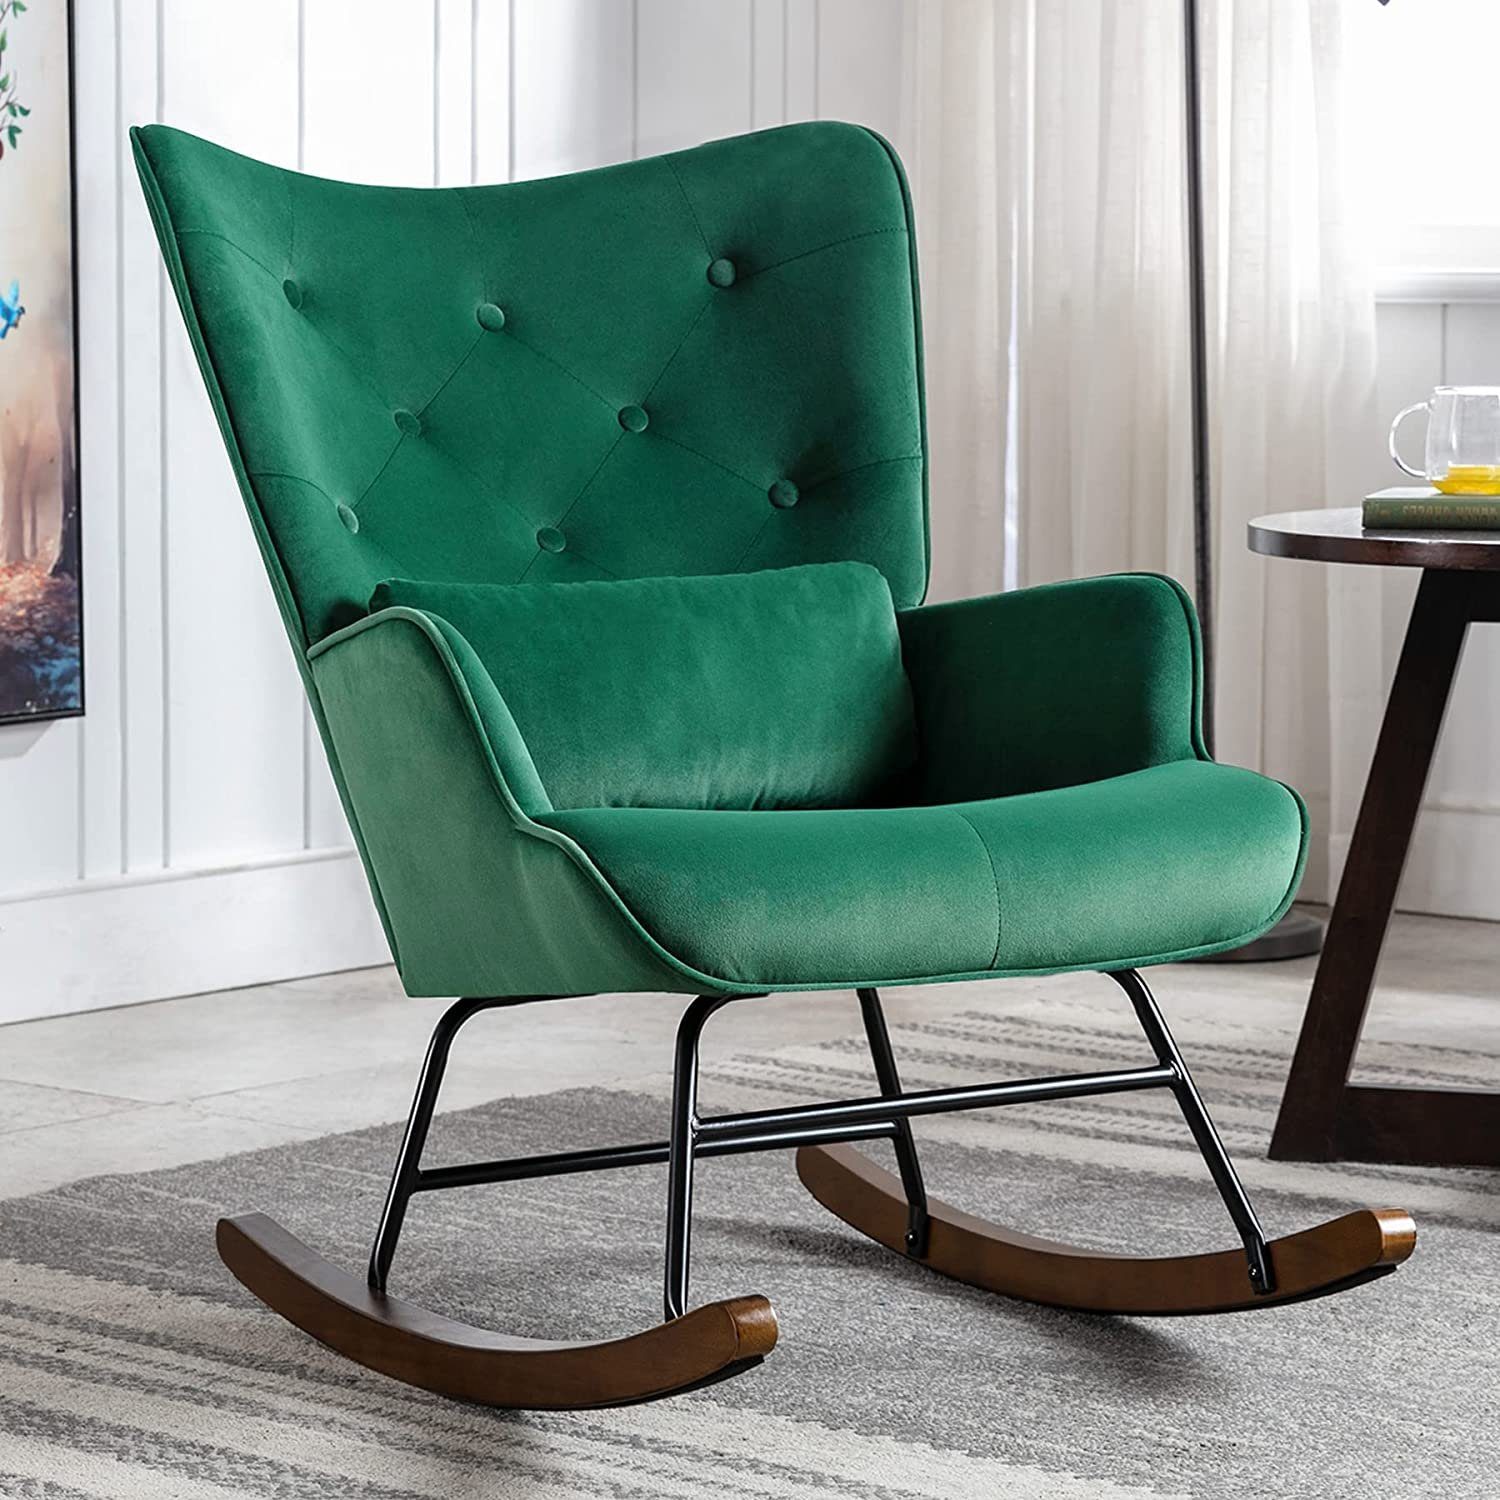 HomeMiYN Schaukelstuhl Metallgestell mit Schaukelstuhl Schaukelstuhl Holzsockel Samt Grün Wohnzimmer Samt, Sessel, aus